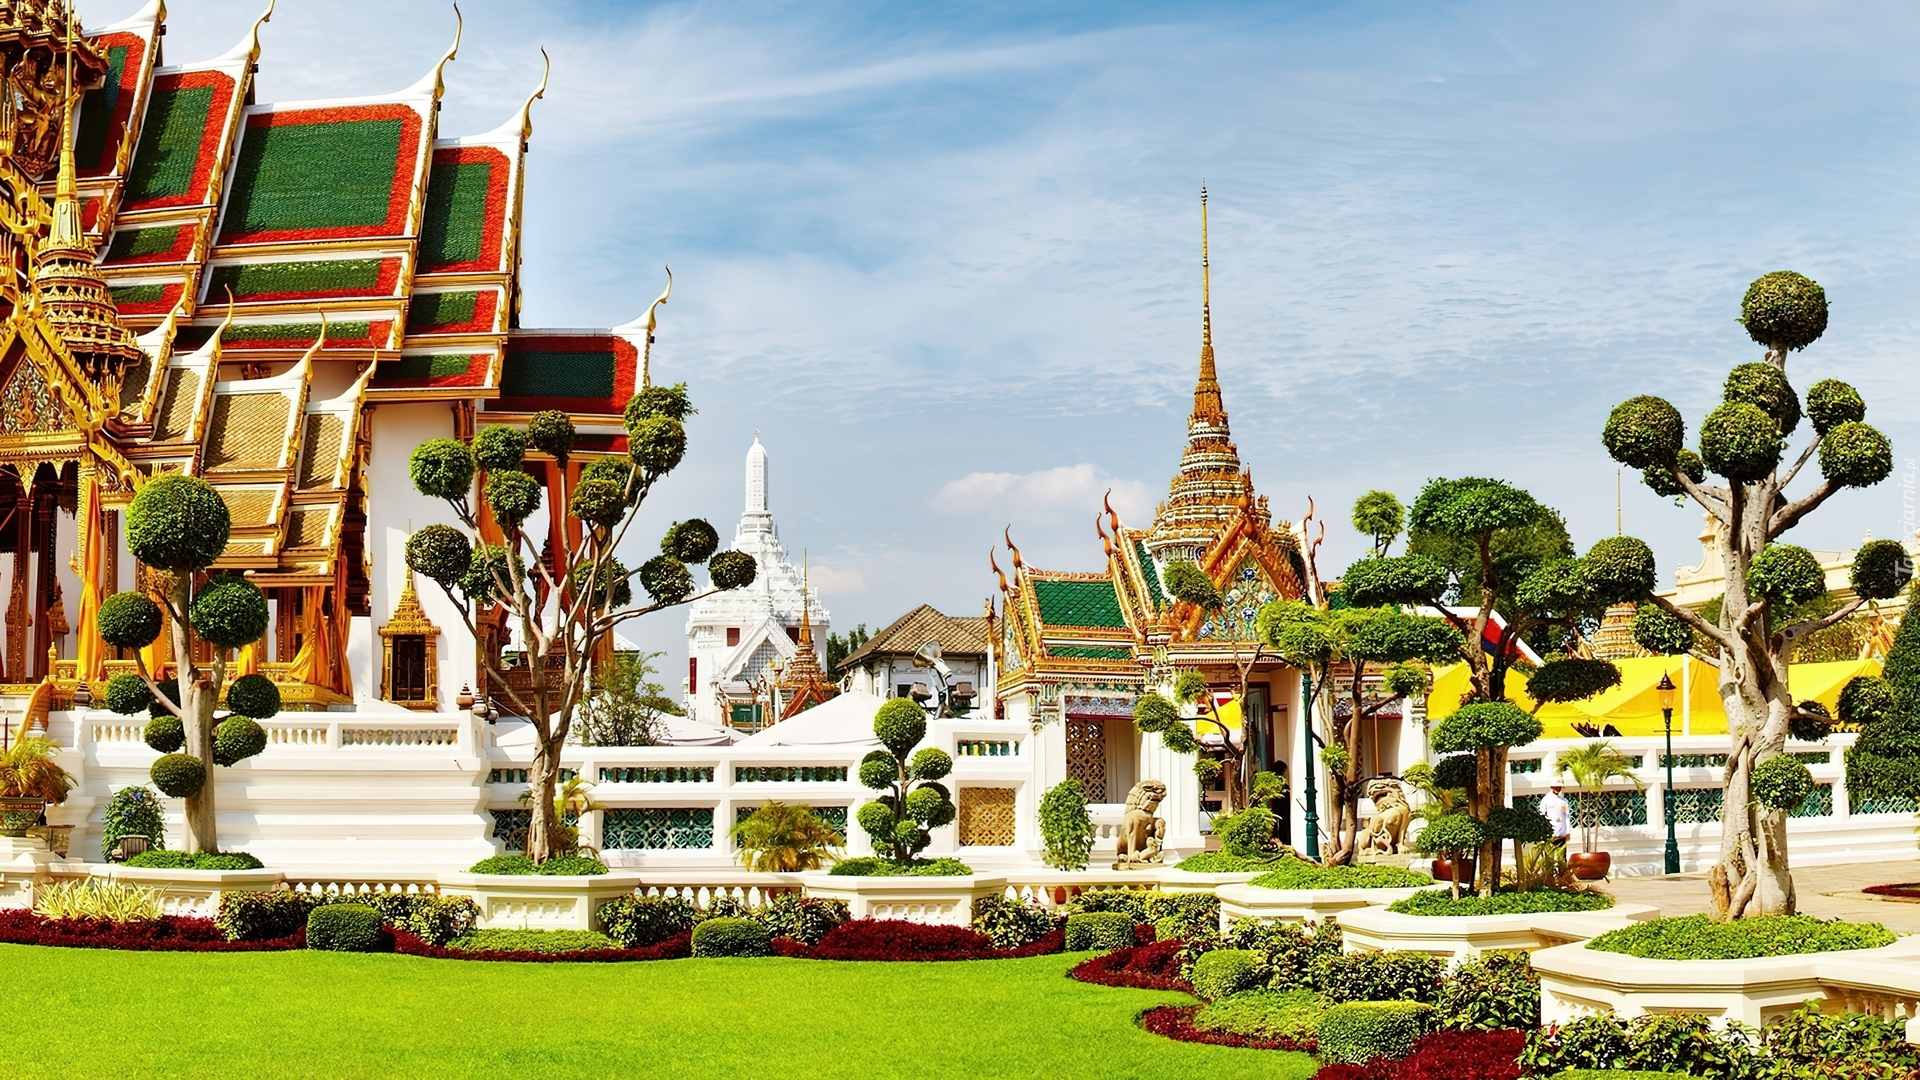 Tajlandia, Pałac, Ogród